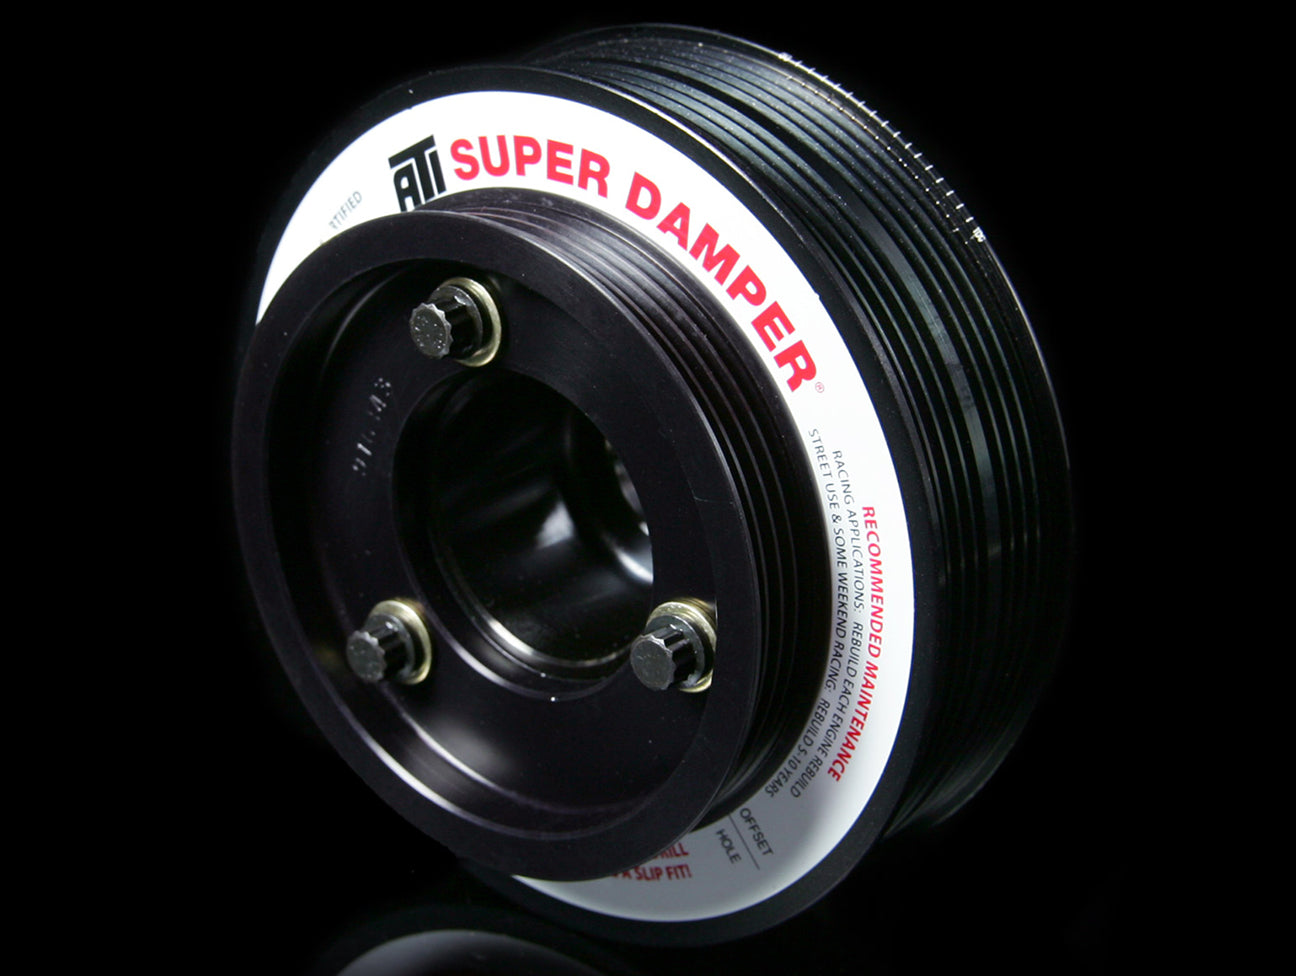 ATI Super Harmonic Street Damper - B-series